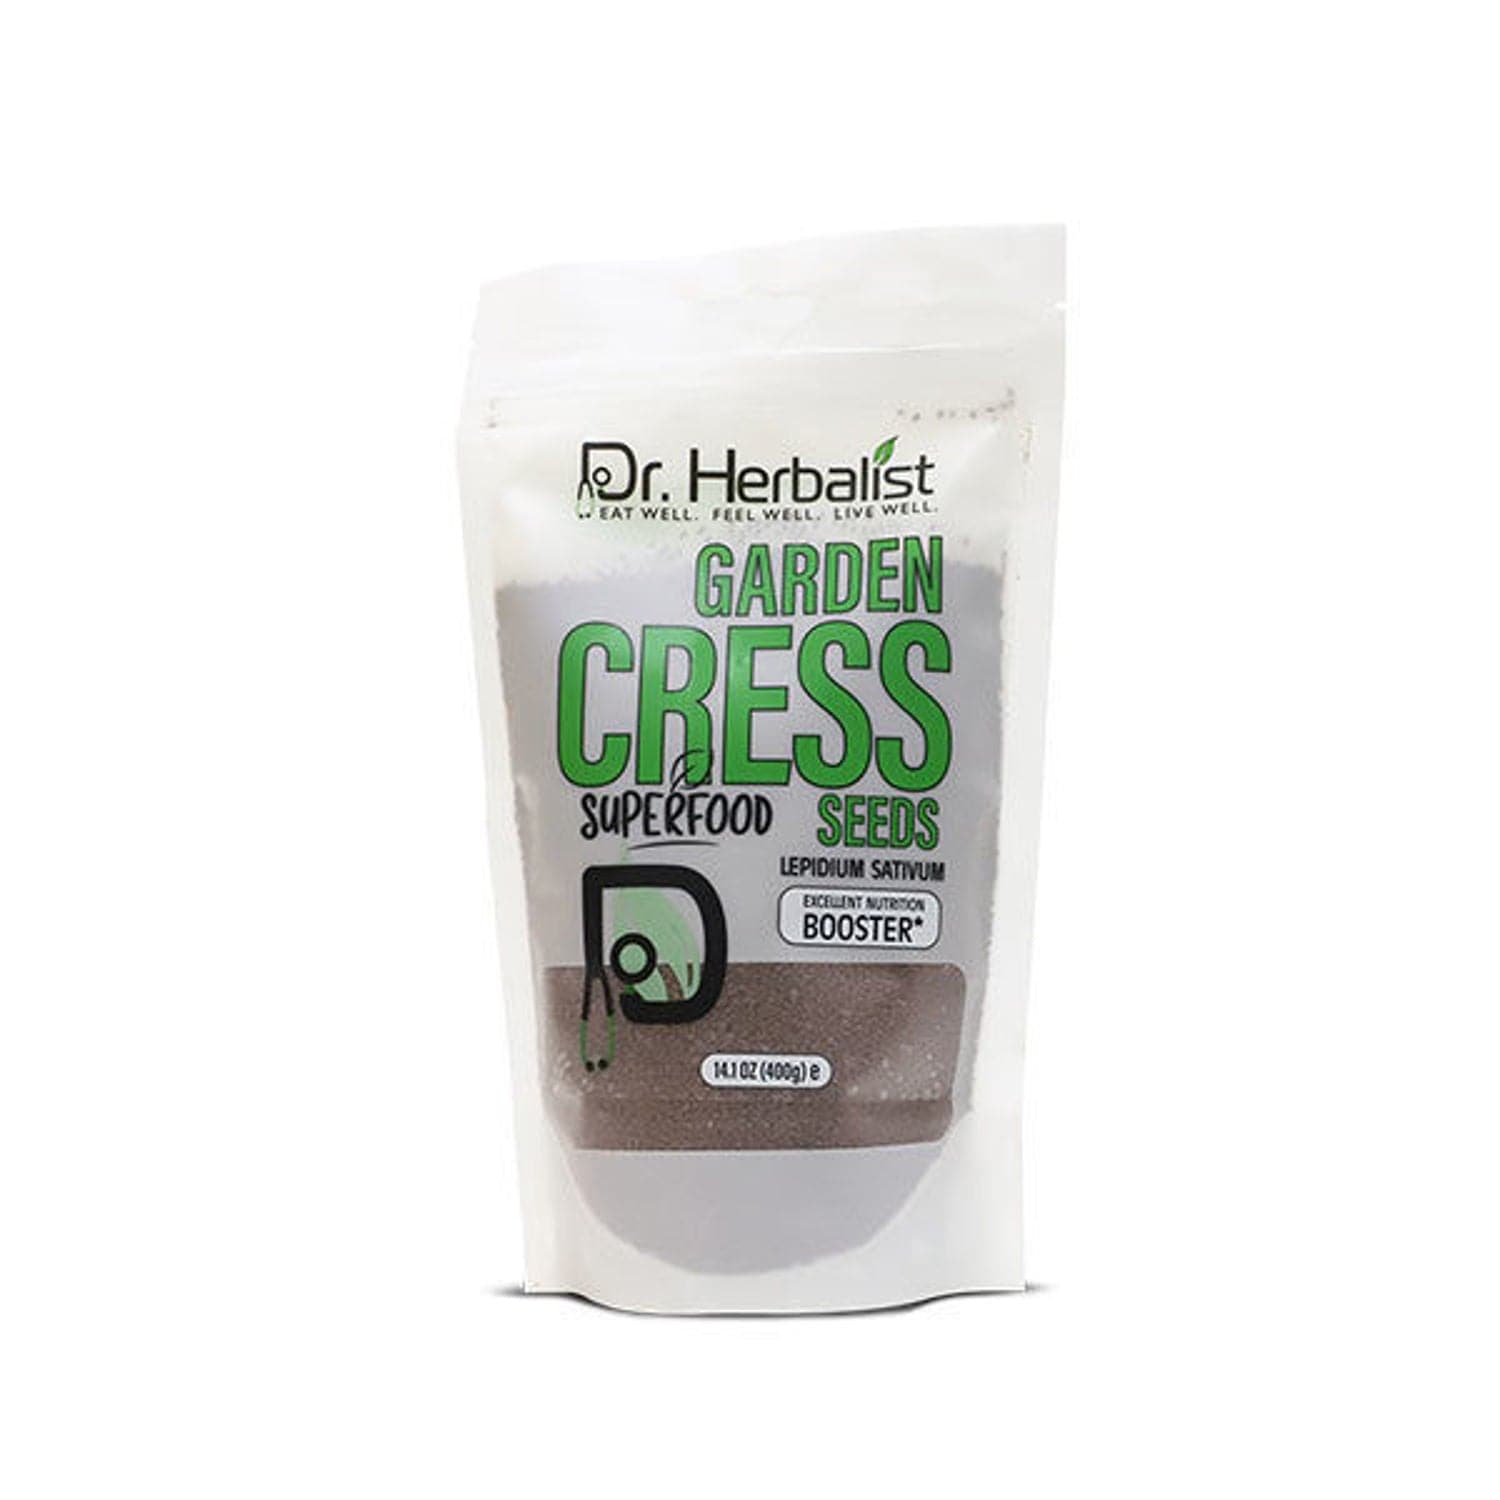 Dr. Herbalist Garden Cress Superfood Seeds 400Gm - Premium  from Hemani - Just Rs 450.00! Shop now at Cozmetica